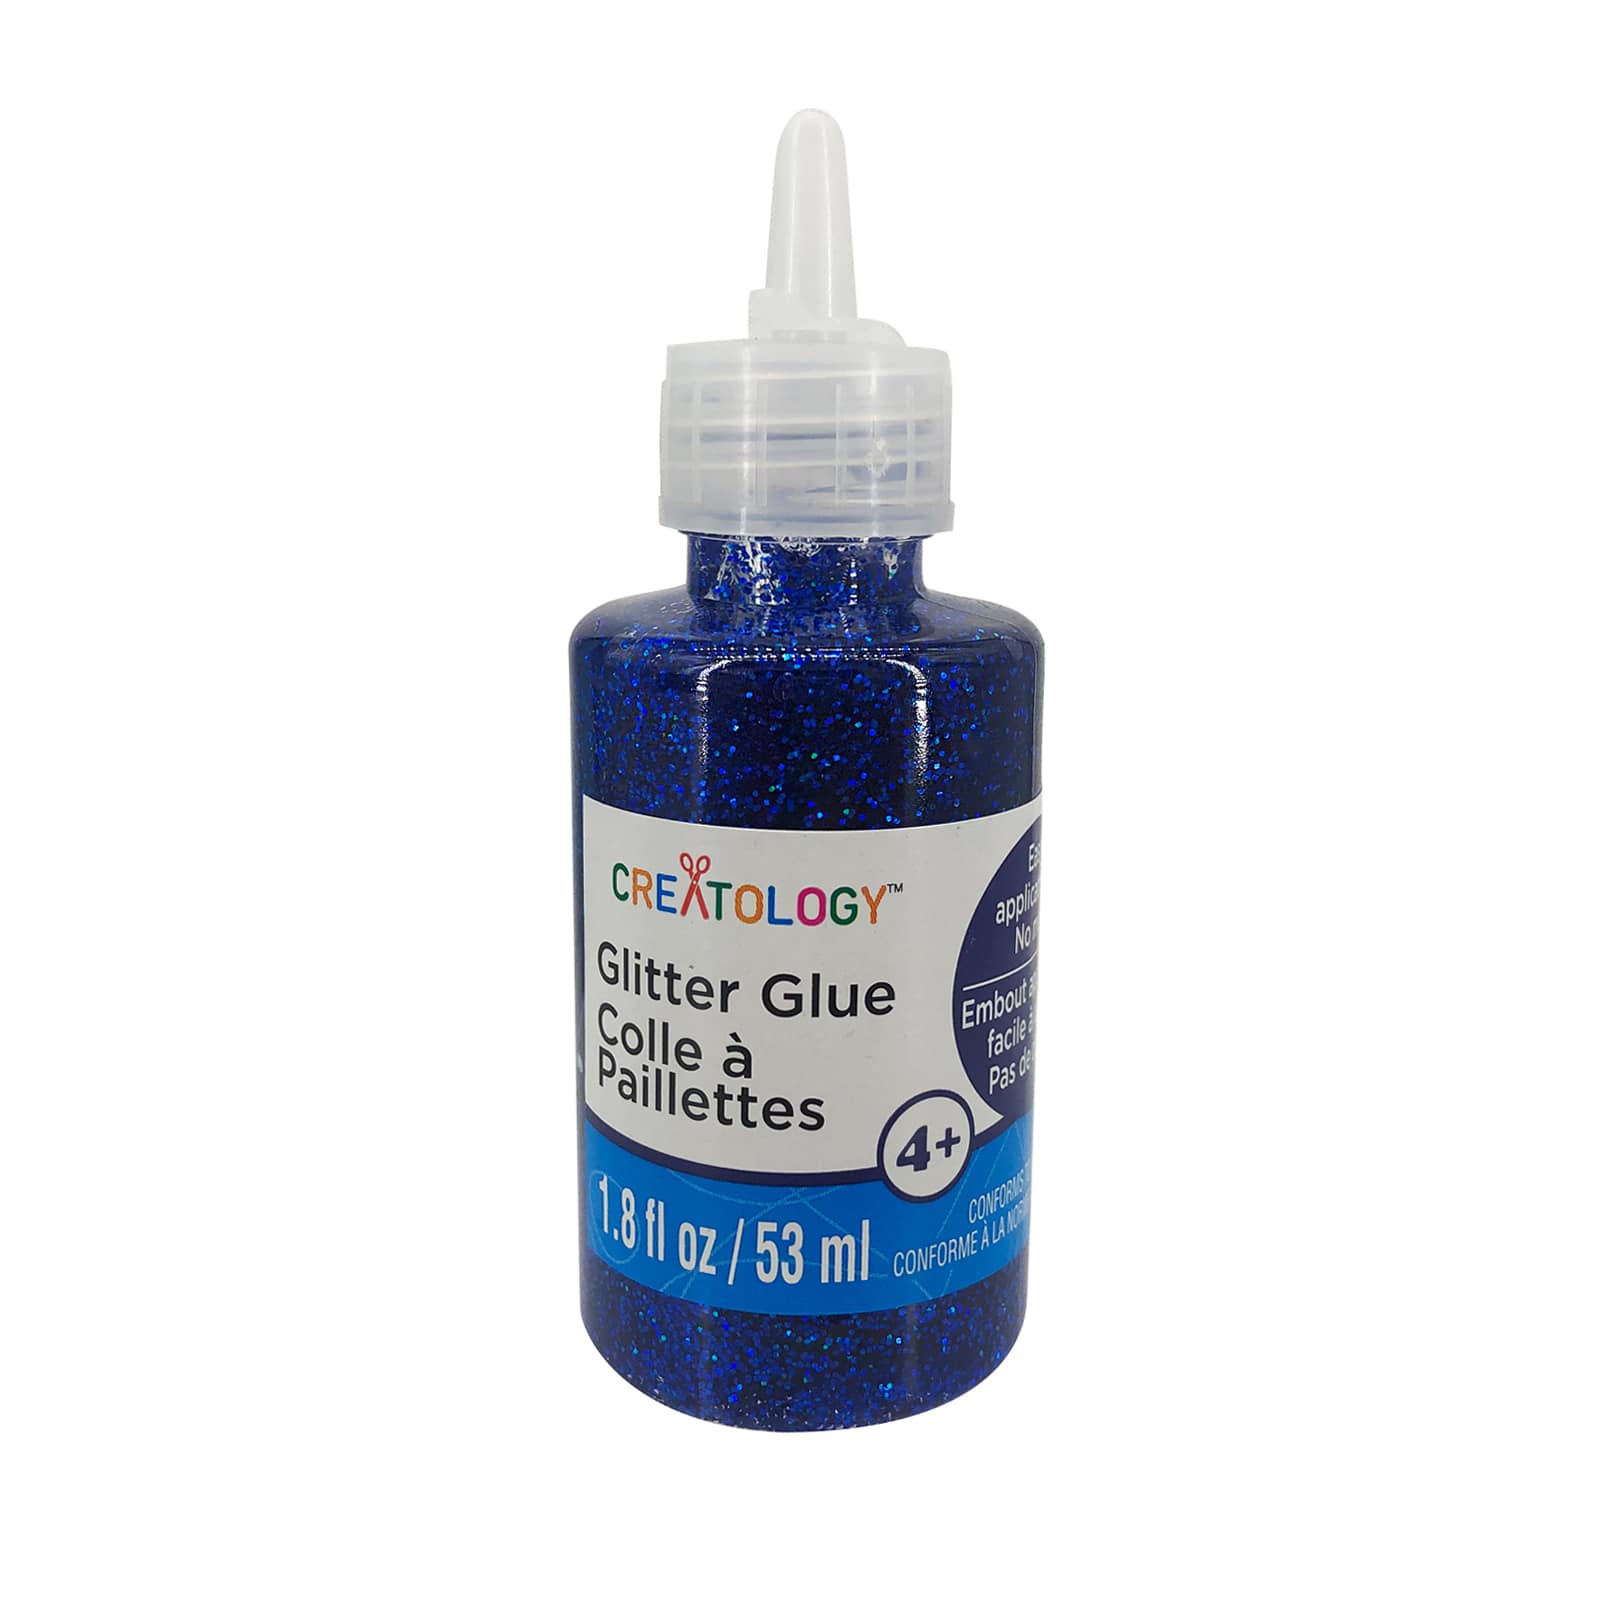 12 Pack: 3.96oz. Glitter Glue by Creatology™